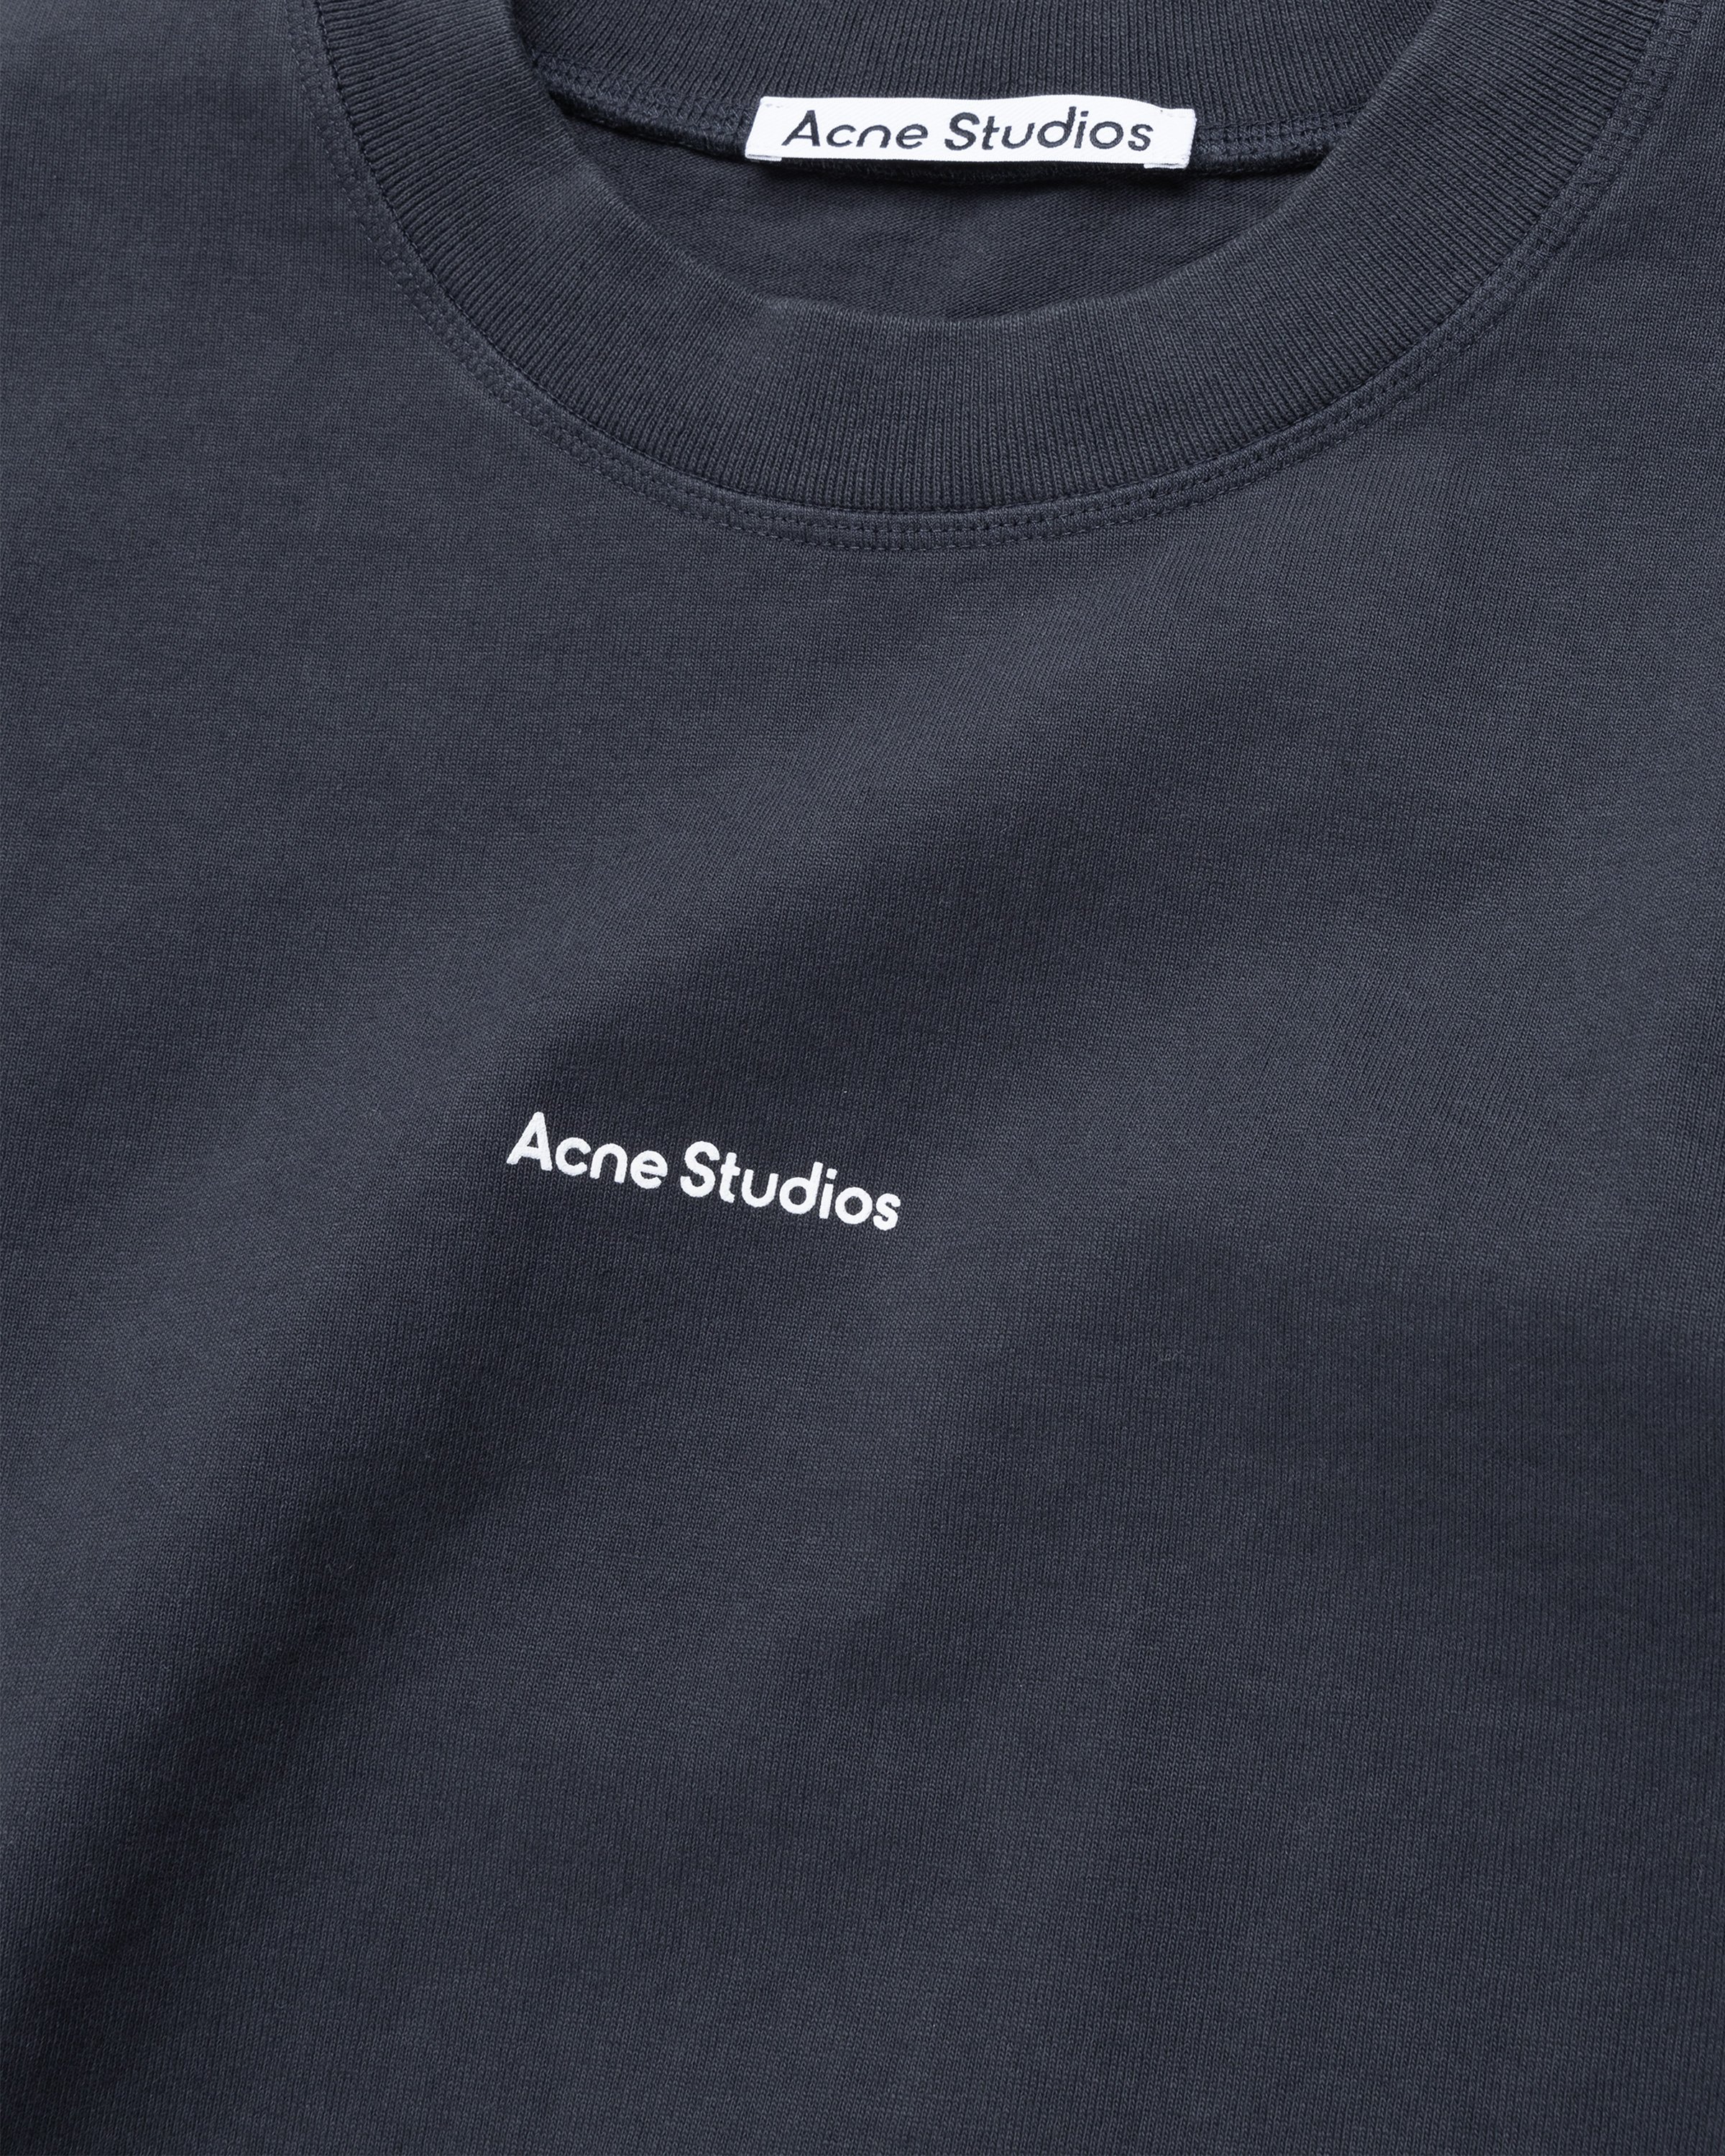 Acne Studios - Logo Long-Sleeve T-Shirt Black - Clothing - Black - Image 5